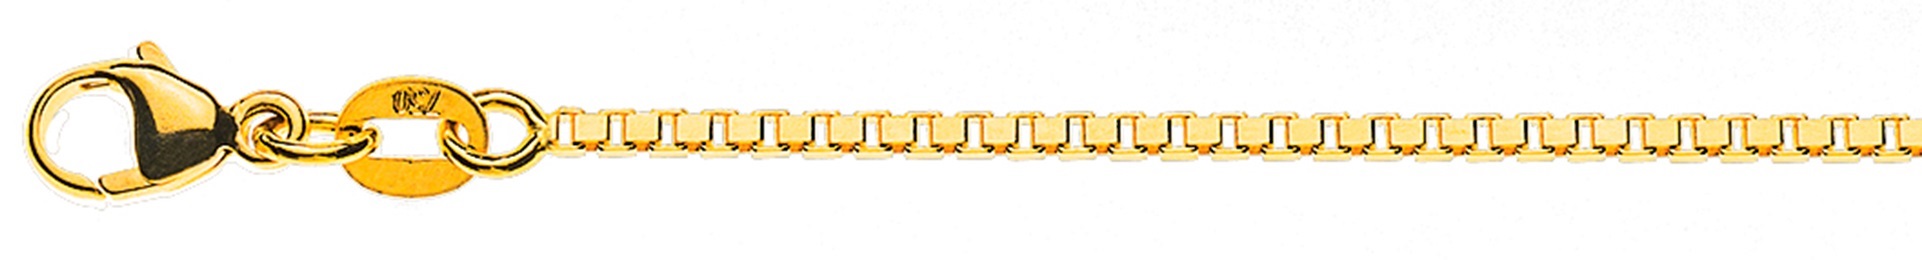 AURONOS Style Necklace yellow gold 9K Venetian chain diamond 42cm 1.4mm